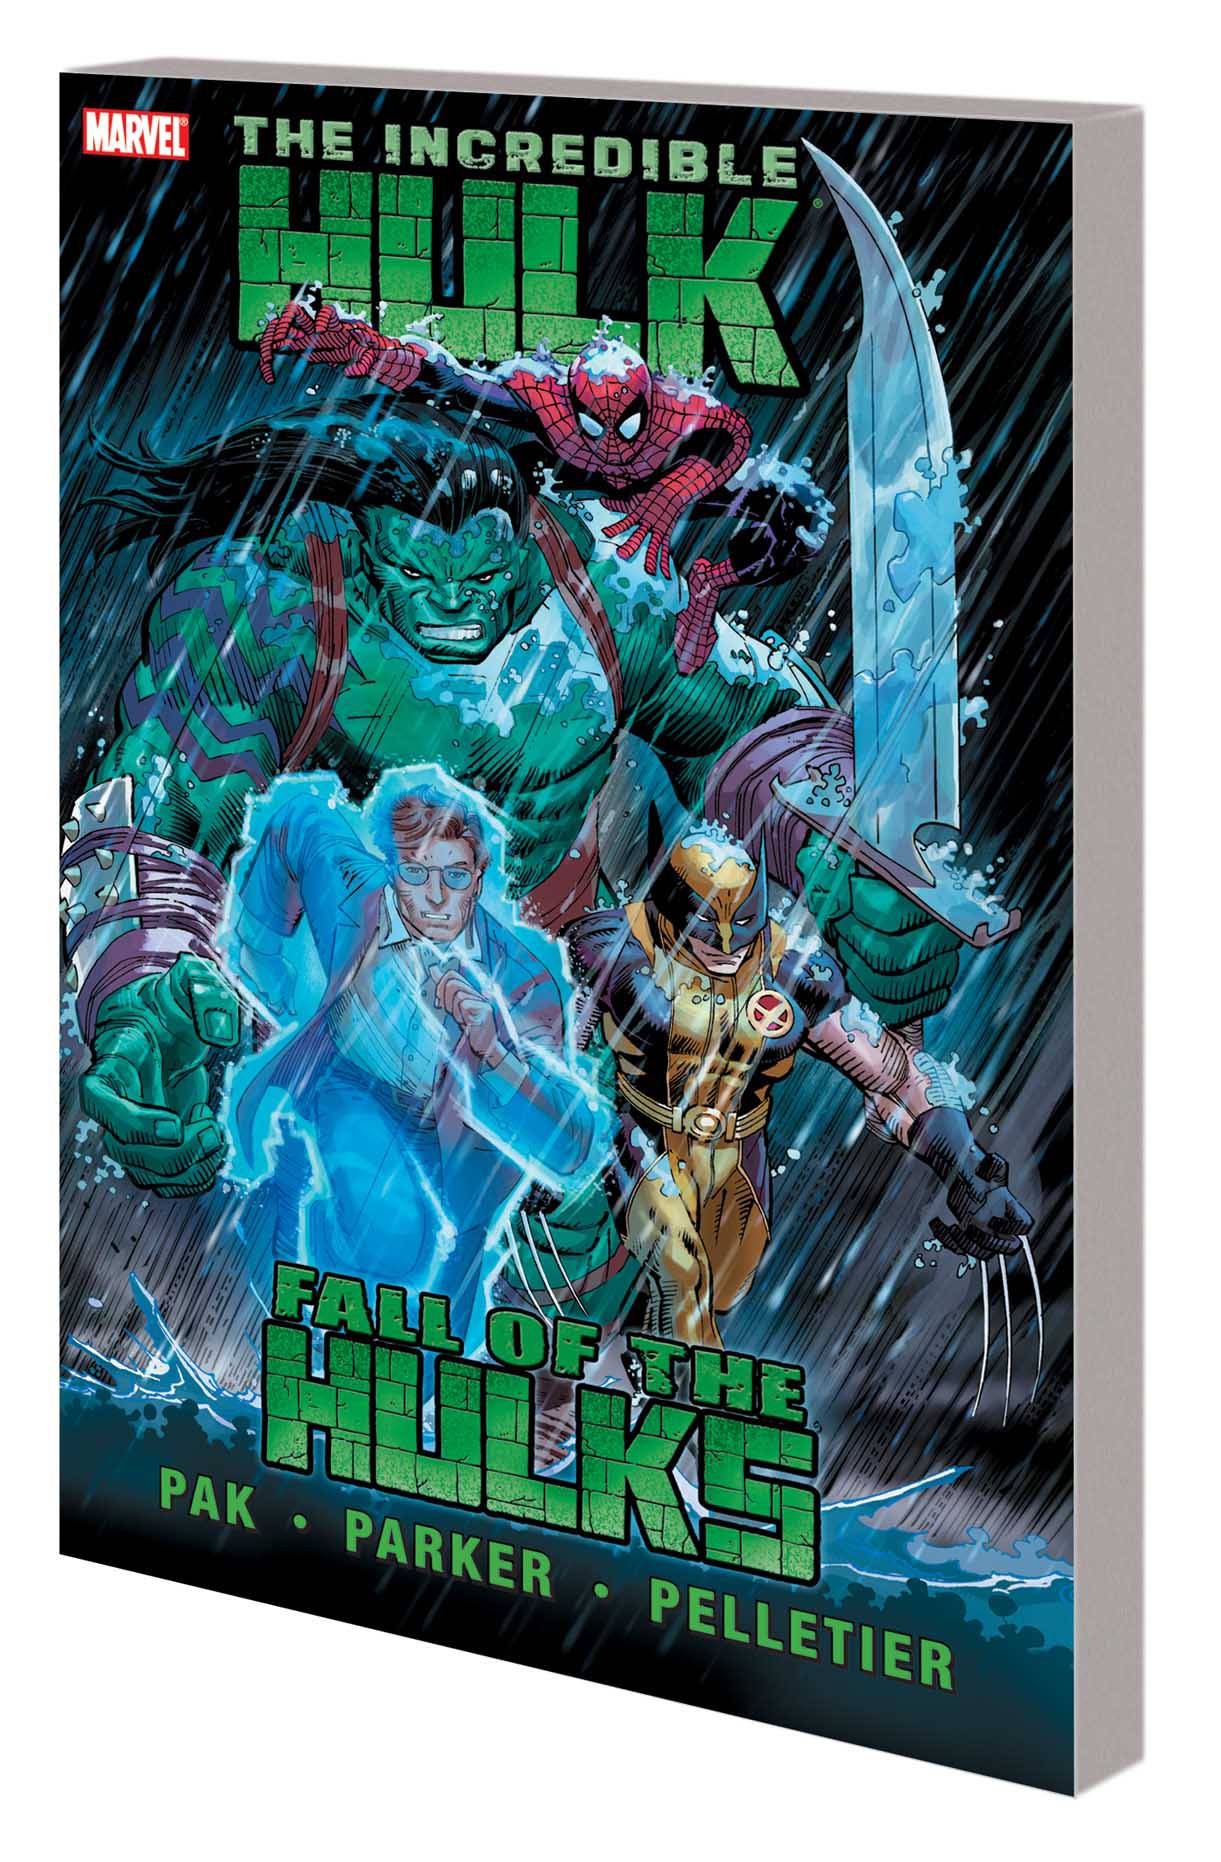 Incredible Hulk Graphic Novel Volume 2 Fall of the Hulks